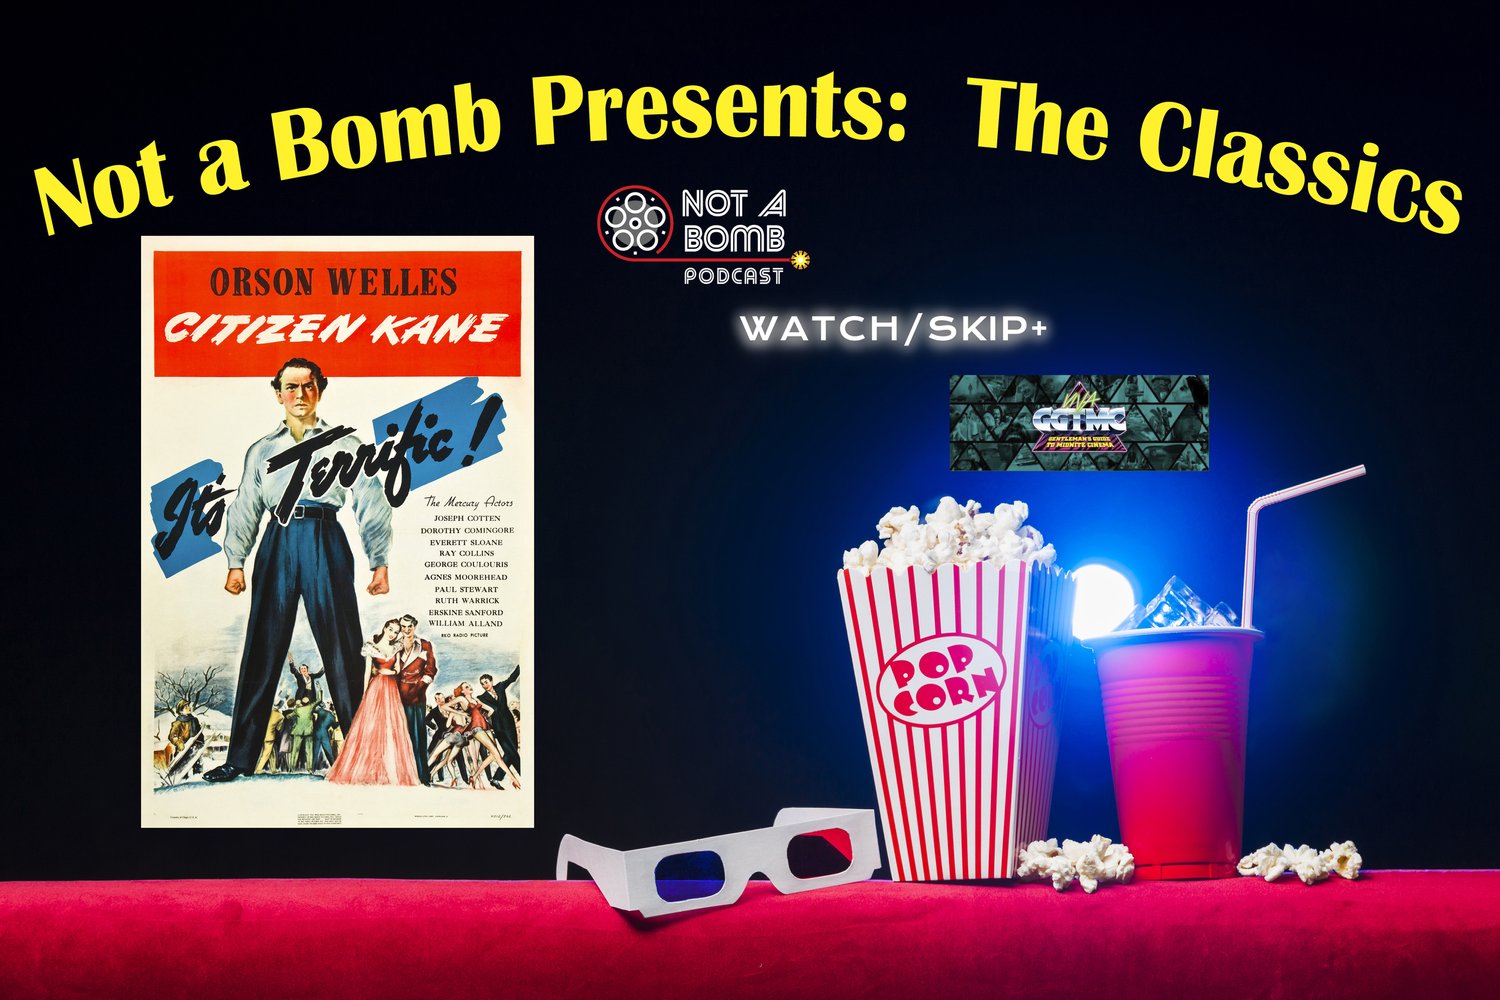 NAB Presents: The Classics - Citizen Kane